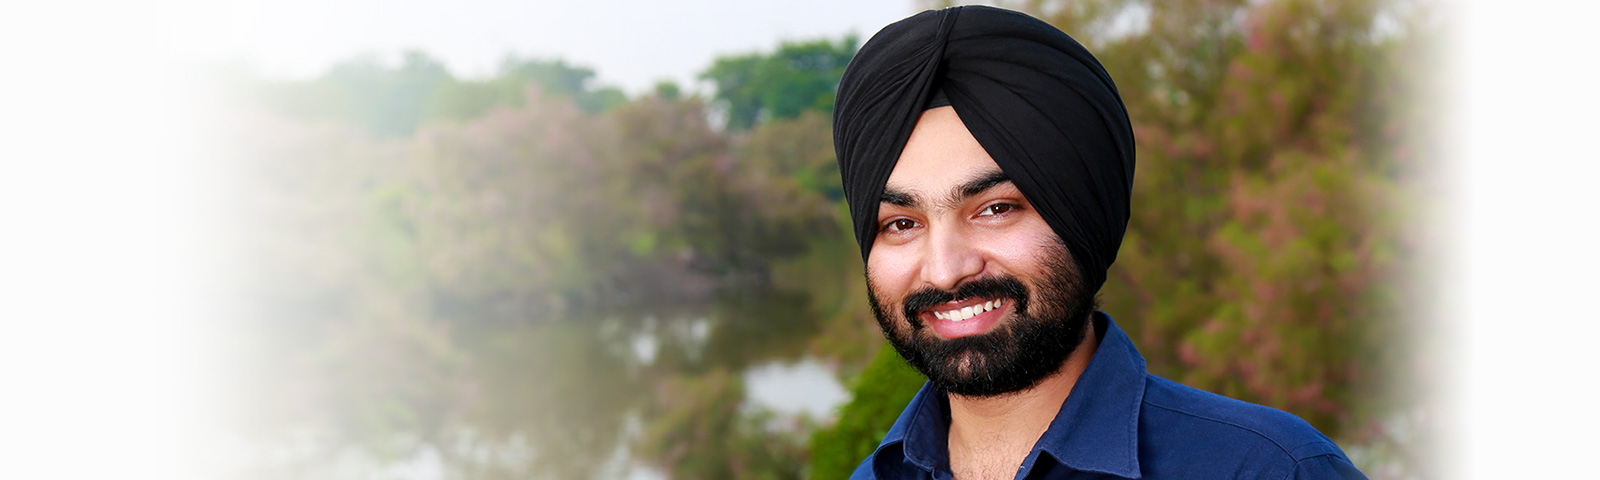 Handsome single Sikh man